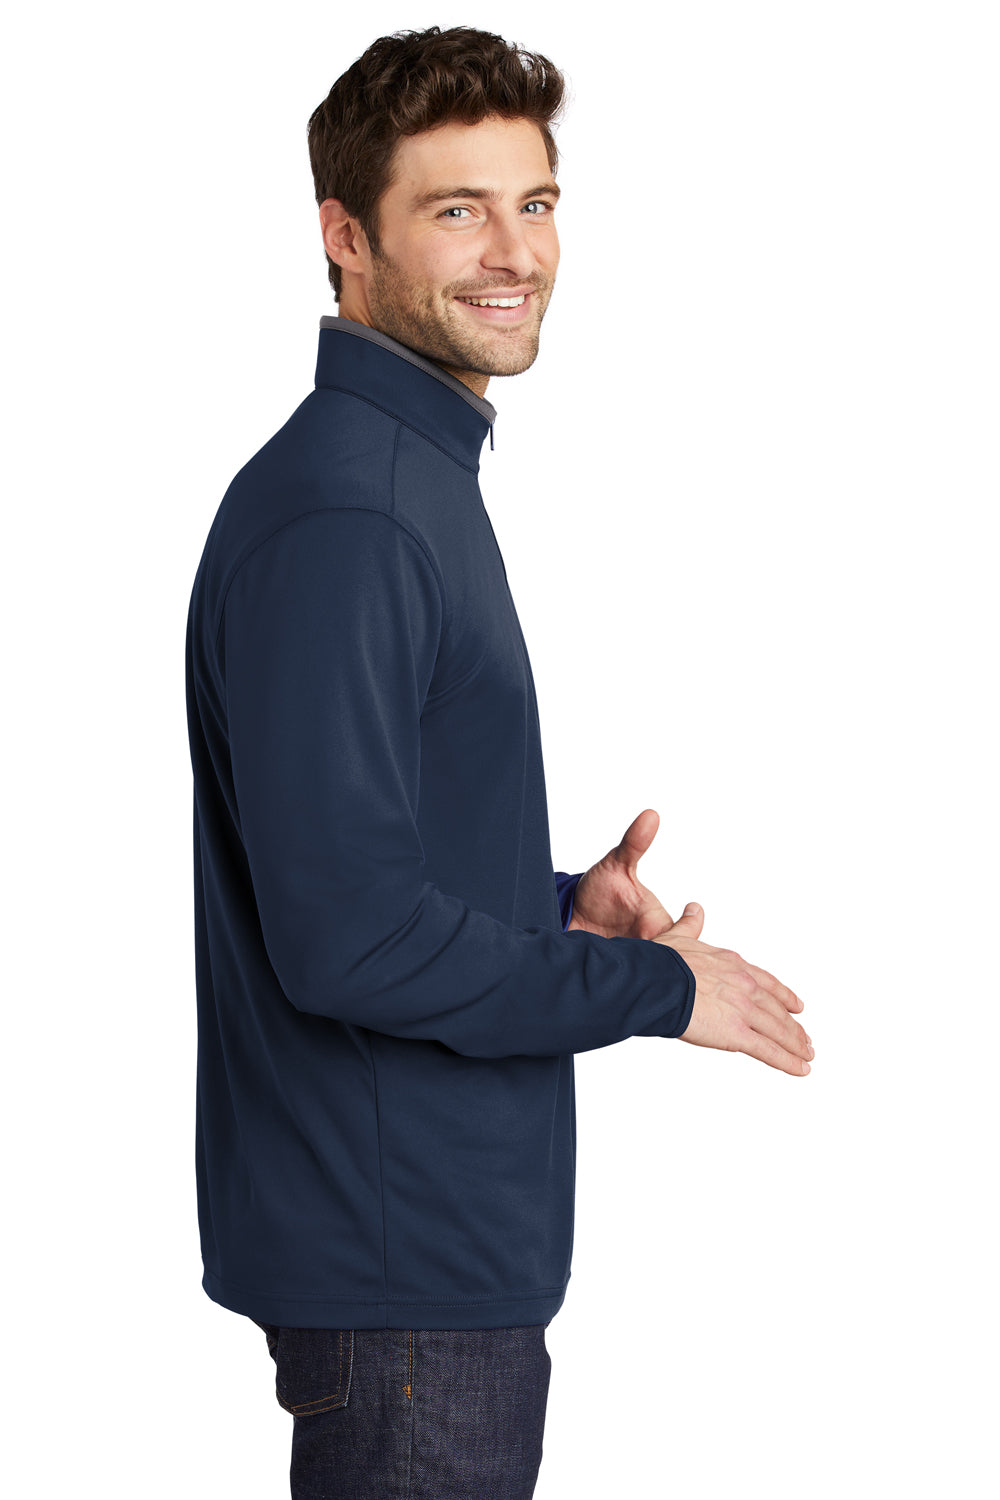 Port Authority Mens Performance Silk Touch 1/4 Zip Sweatshirt Navy Blue/Steel Grey Side